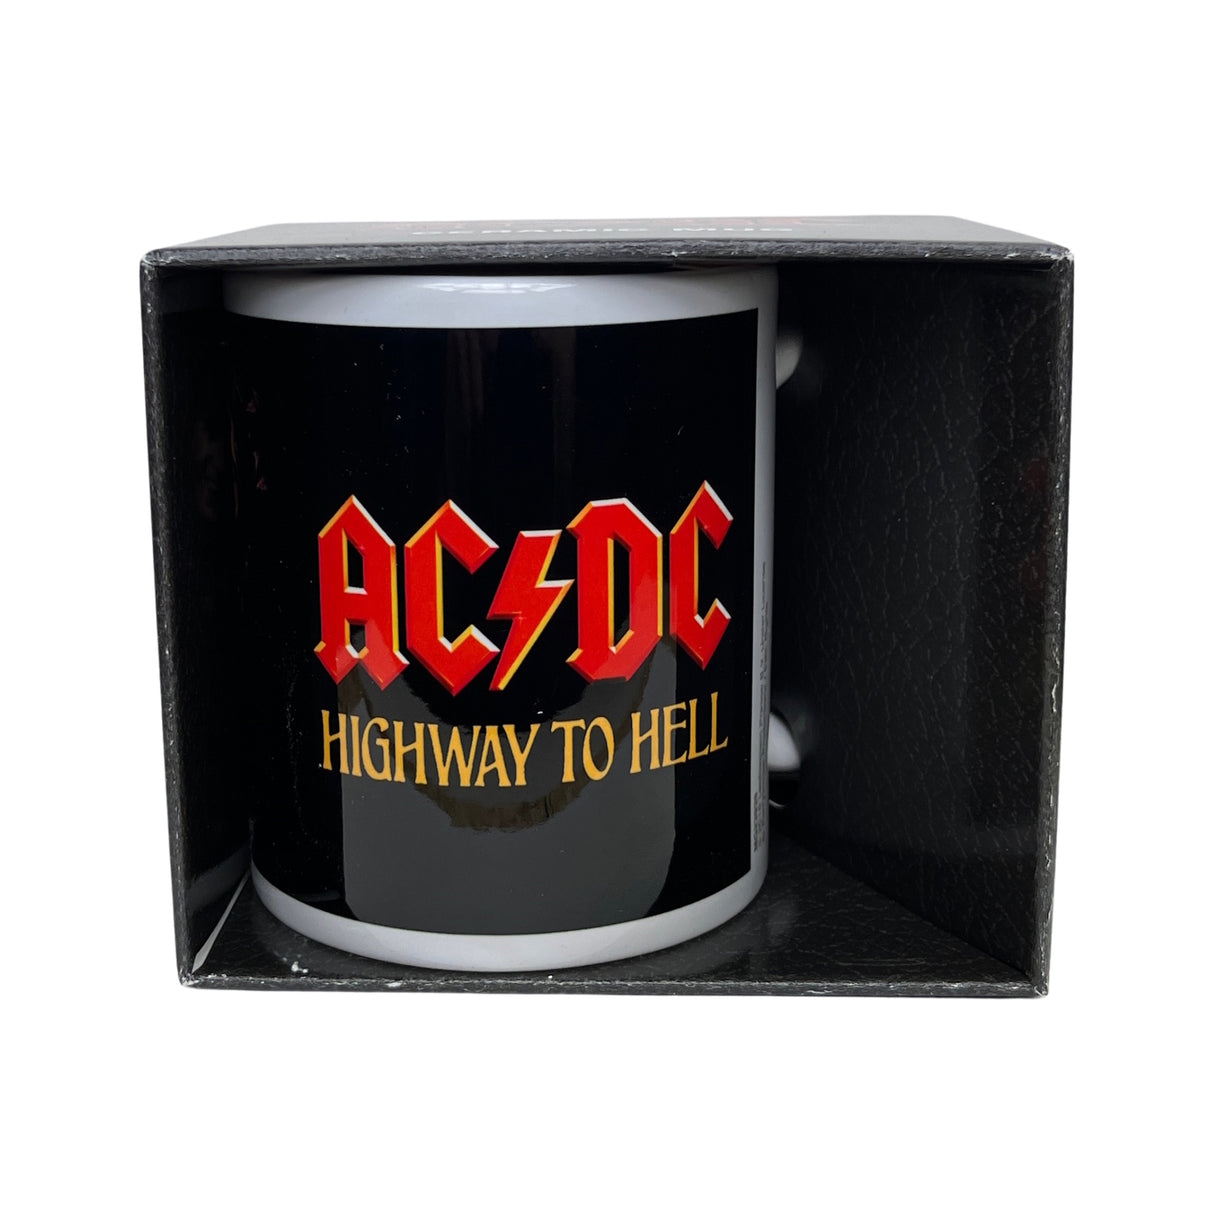 AC/DC Highway to Hell Kaffeebecher